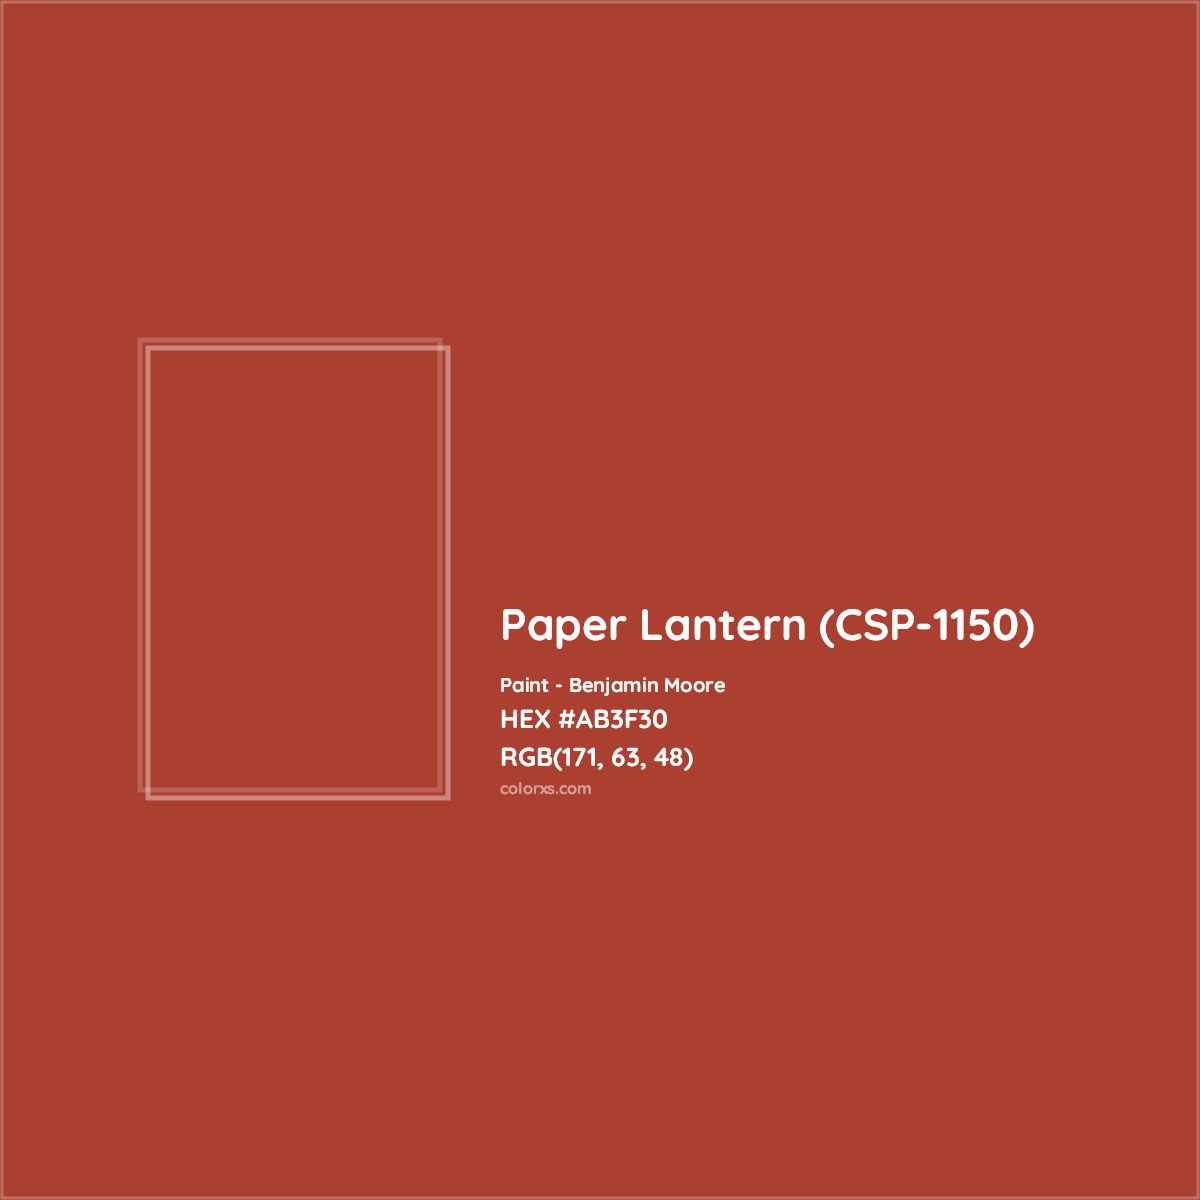 HEX #AB3F30 Paper Lantern (CSP-1150) Paint Benjamin Moore - Color Code